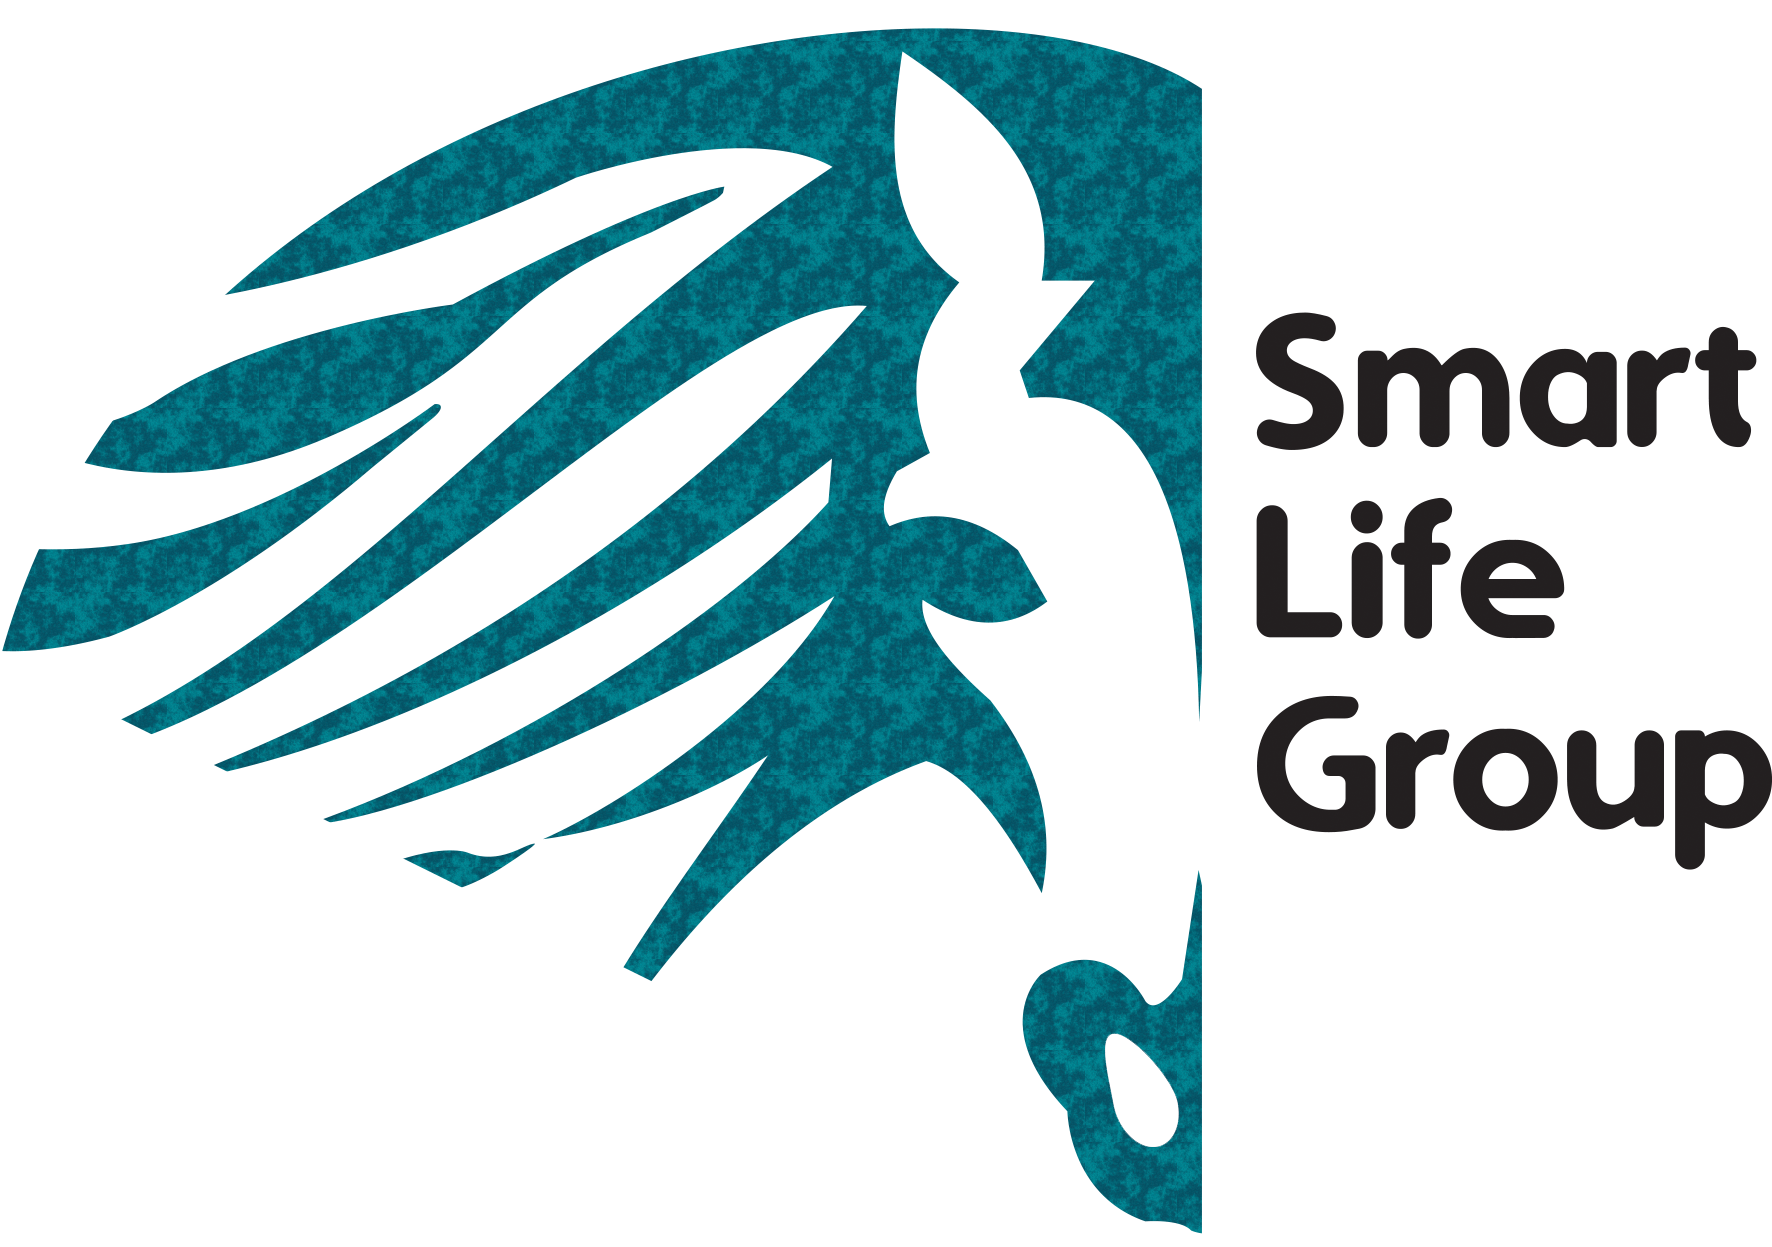 Smart Life Group  Vivi smart, rendi la tua vita facile!